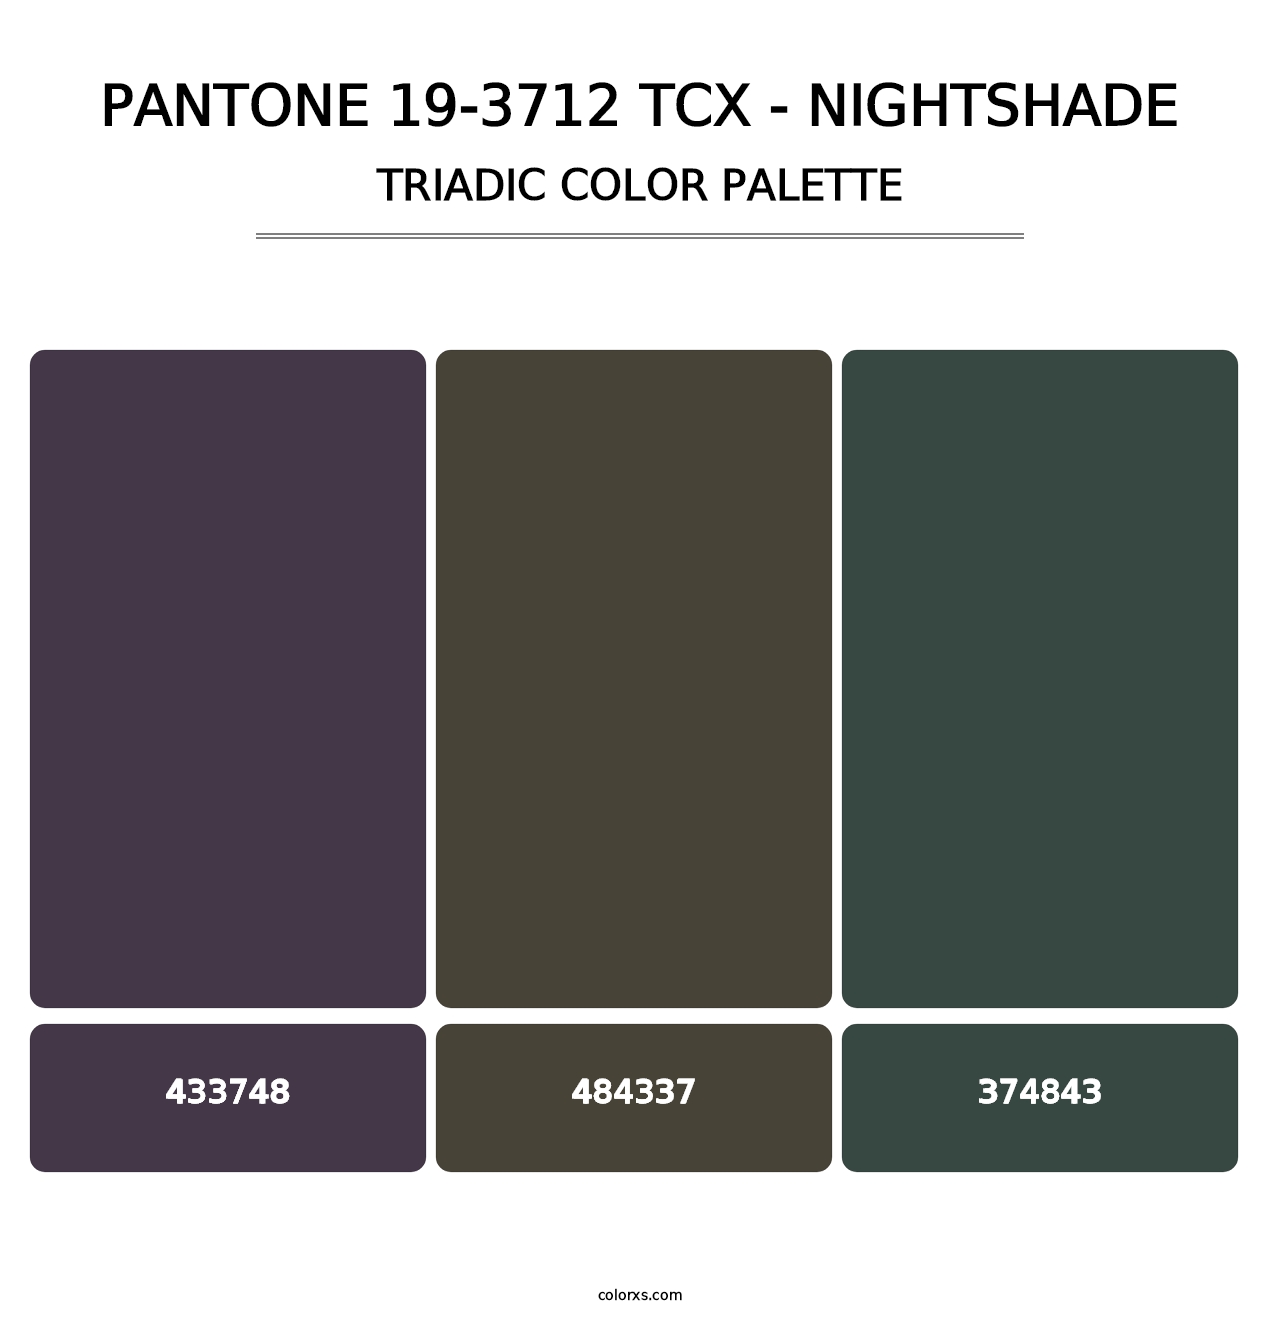 PANTONE 19-3712 TCX - Nightshade - Triadic Color Palette